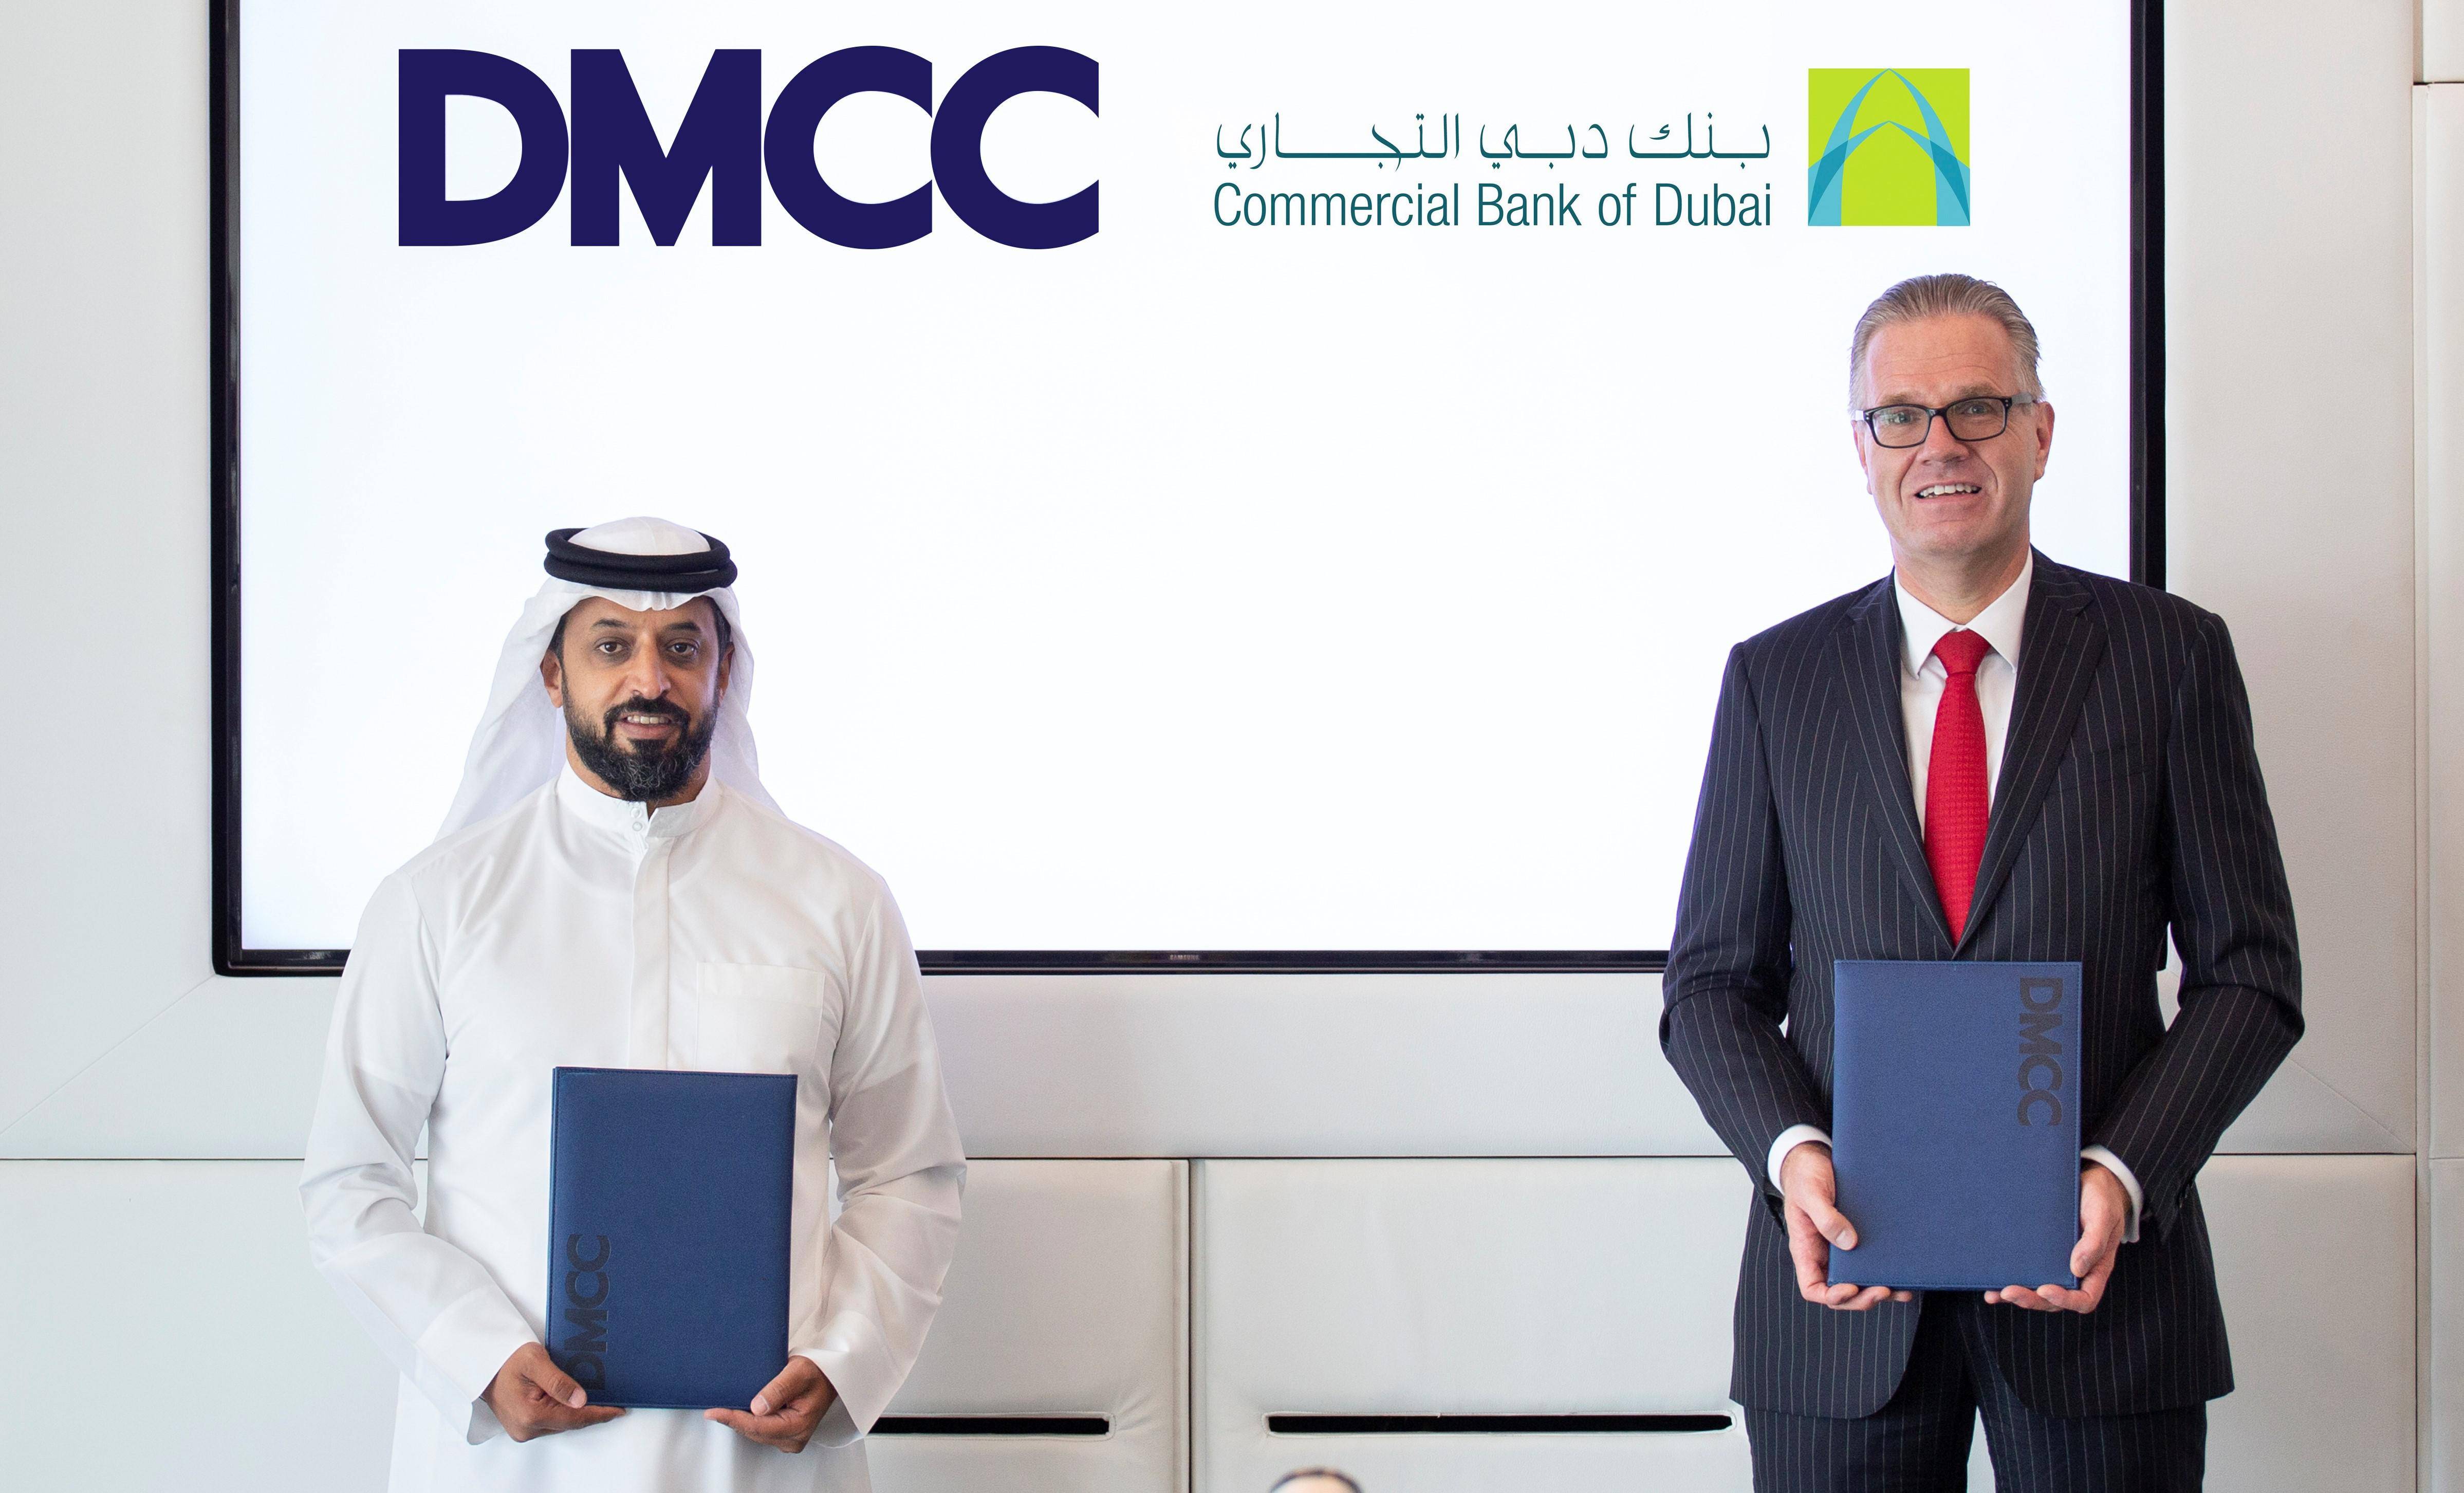 Wl company dmcc reviews. DMCC Дубай. Commercial Bank of Dubai. Dubai Multi Commodities Centre (DMCC). Фризона DMCC это.